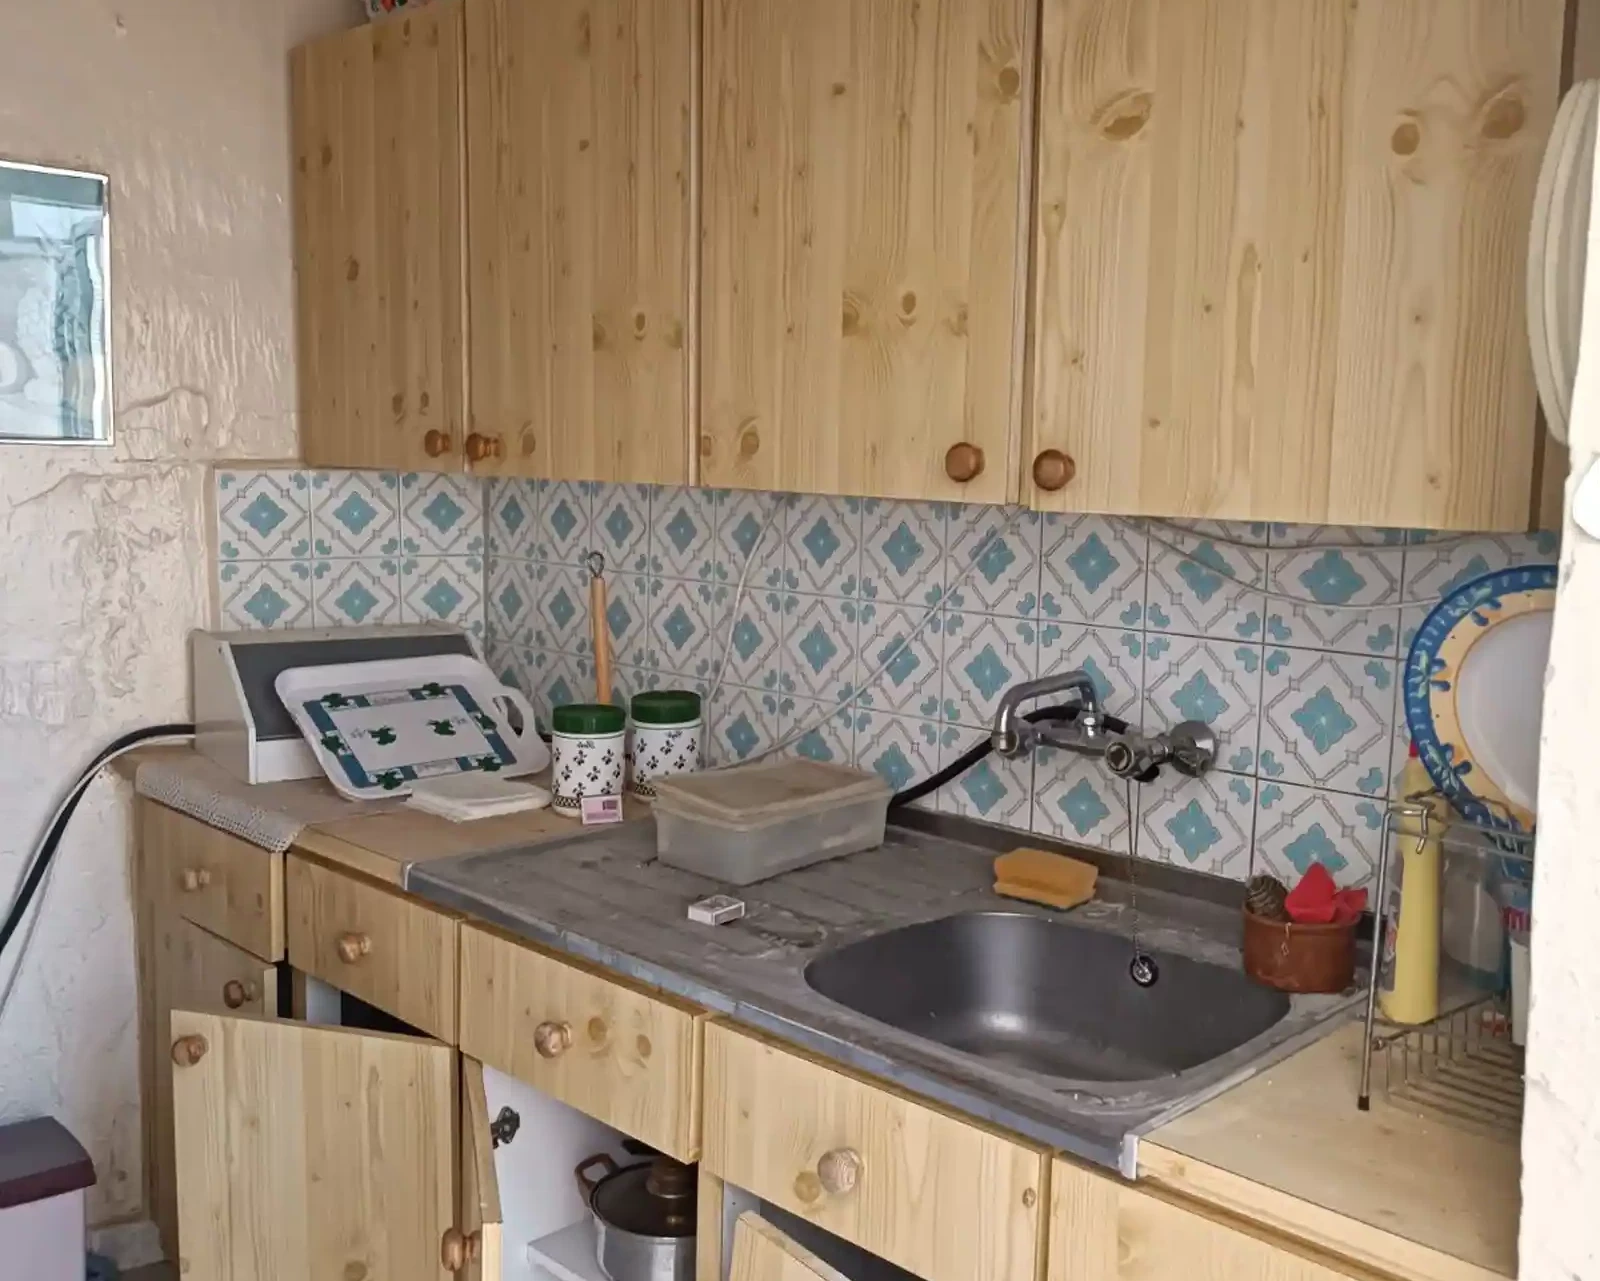 1-bedroom semi-detached fоr sаle €40.000, image 1